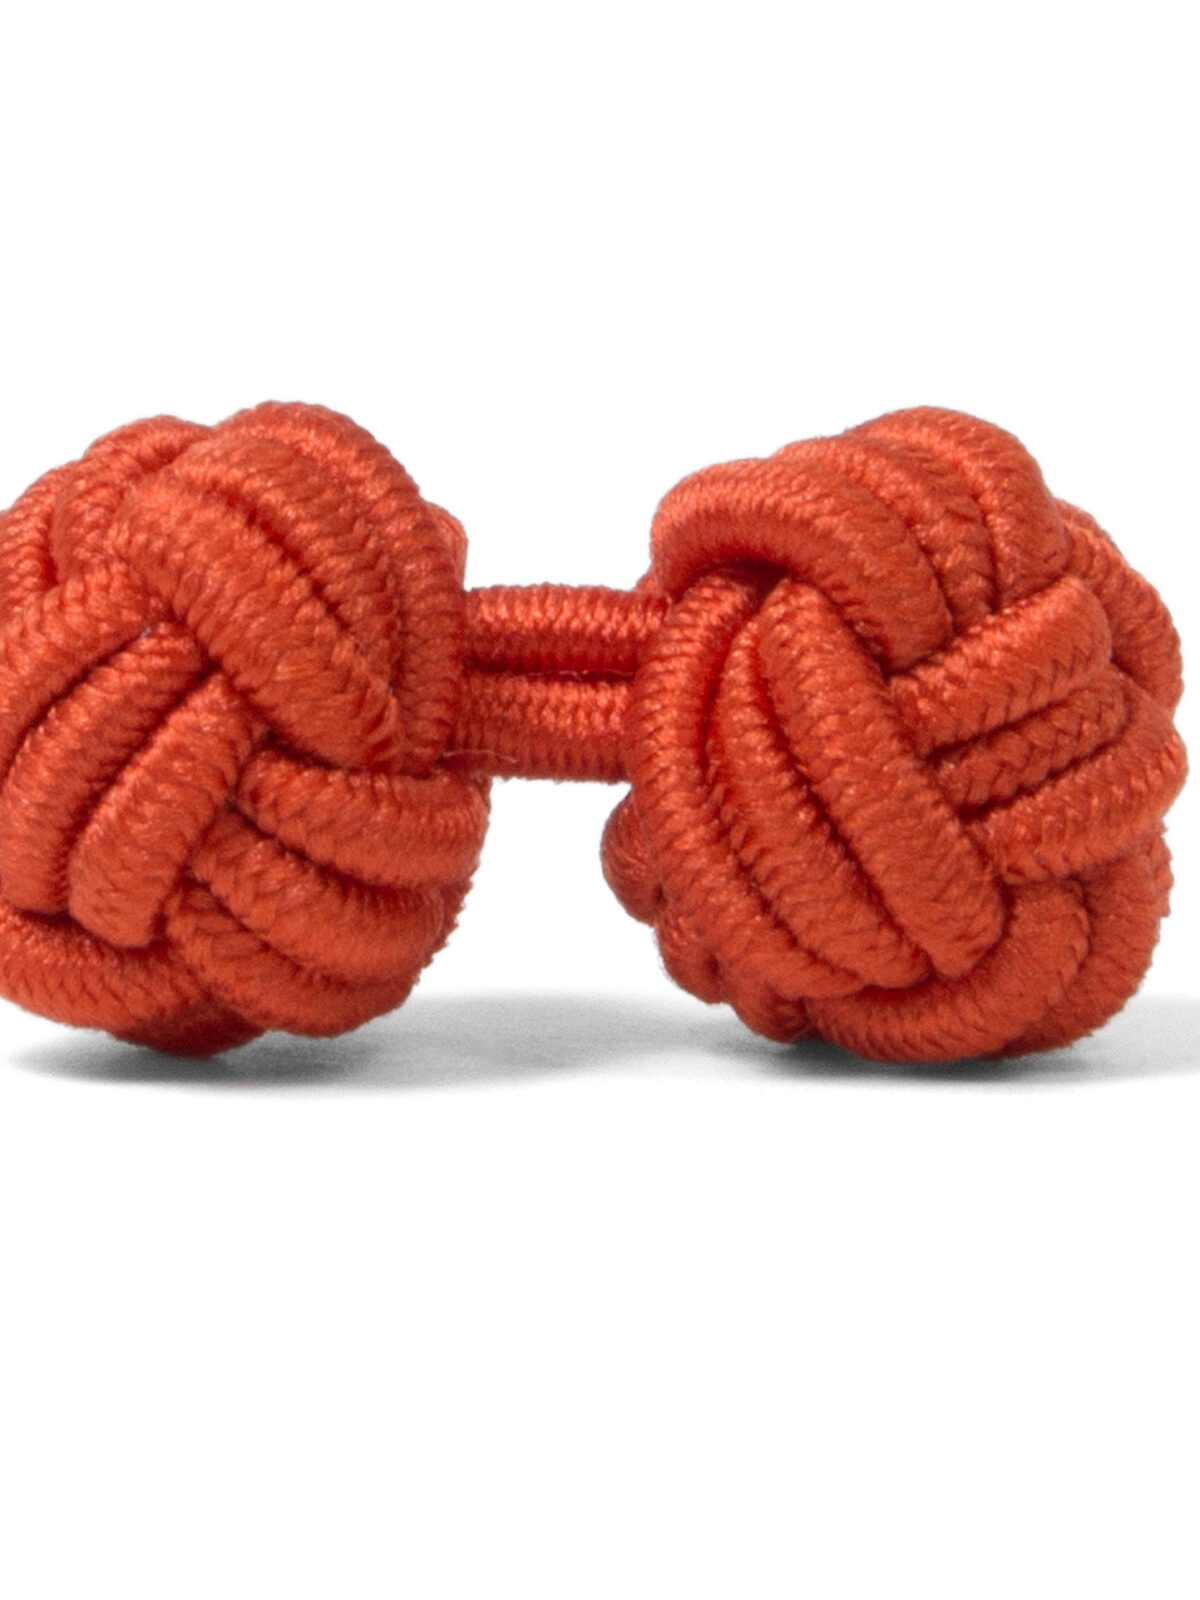 Orange Silk Knots